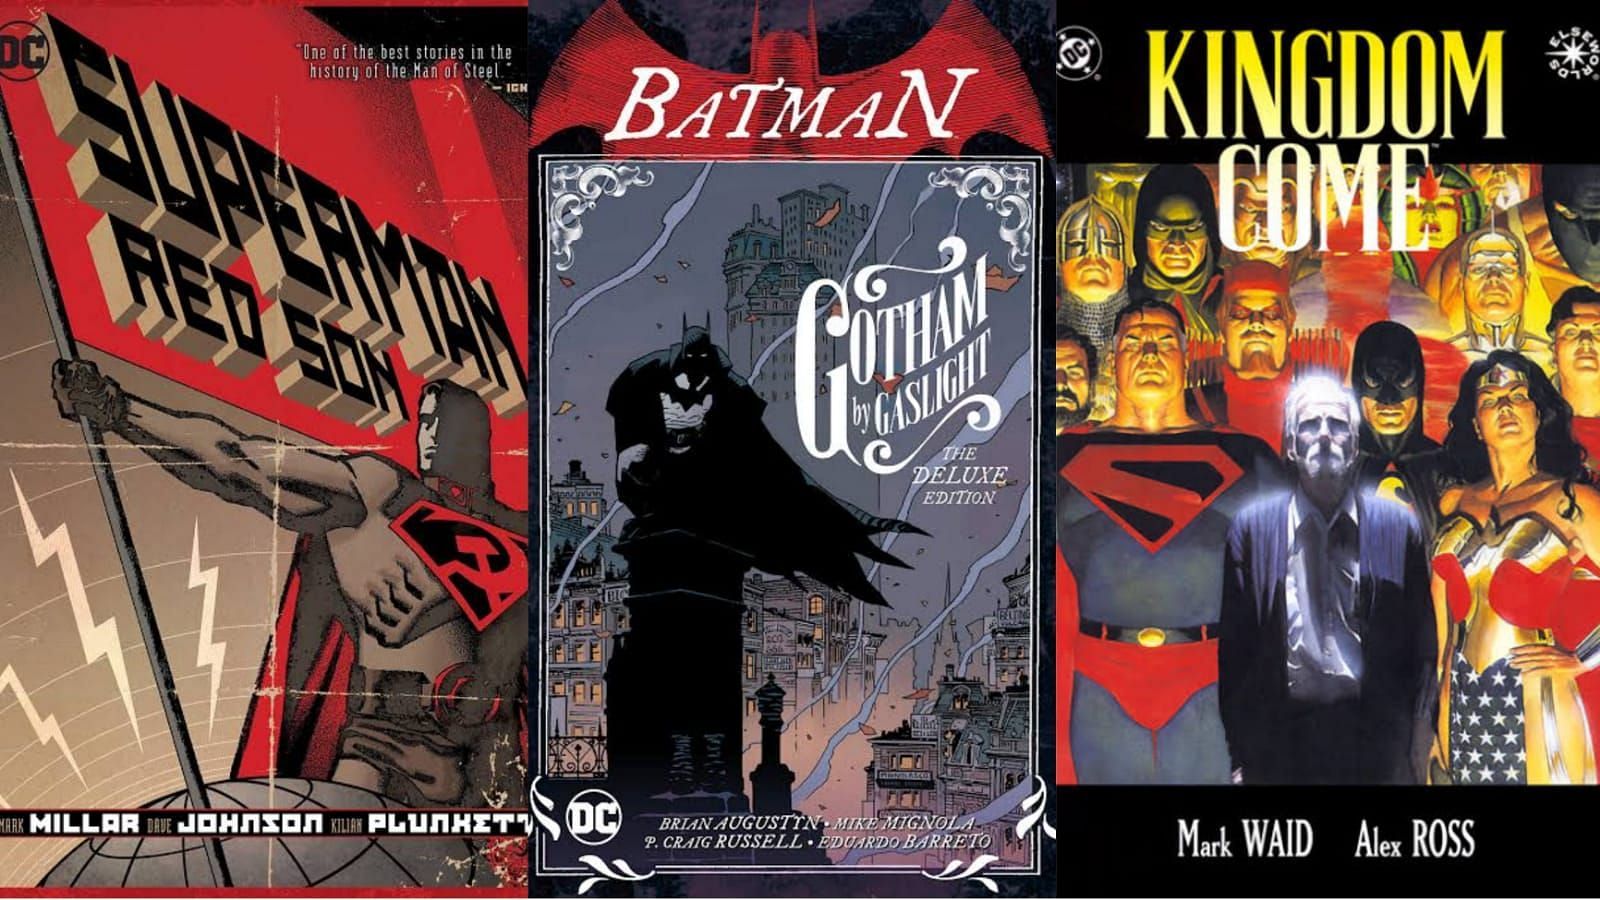 Superman: Red Son, Batman: Gotham by Gaslight, Kingdom Come covers (Image via DC Comics)